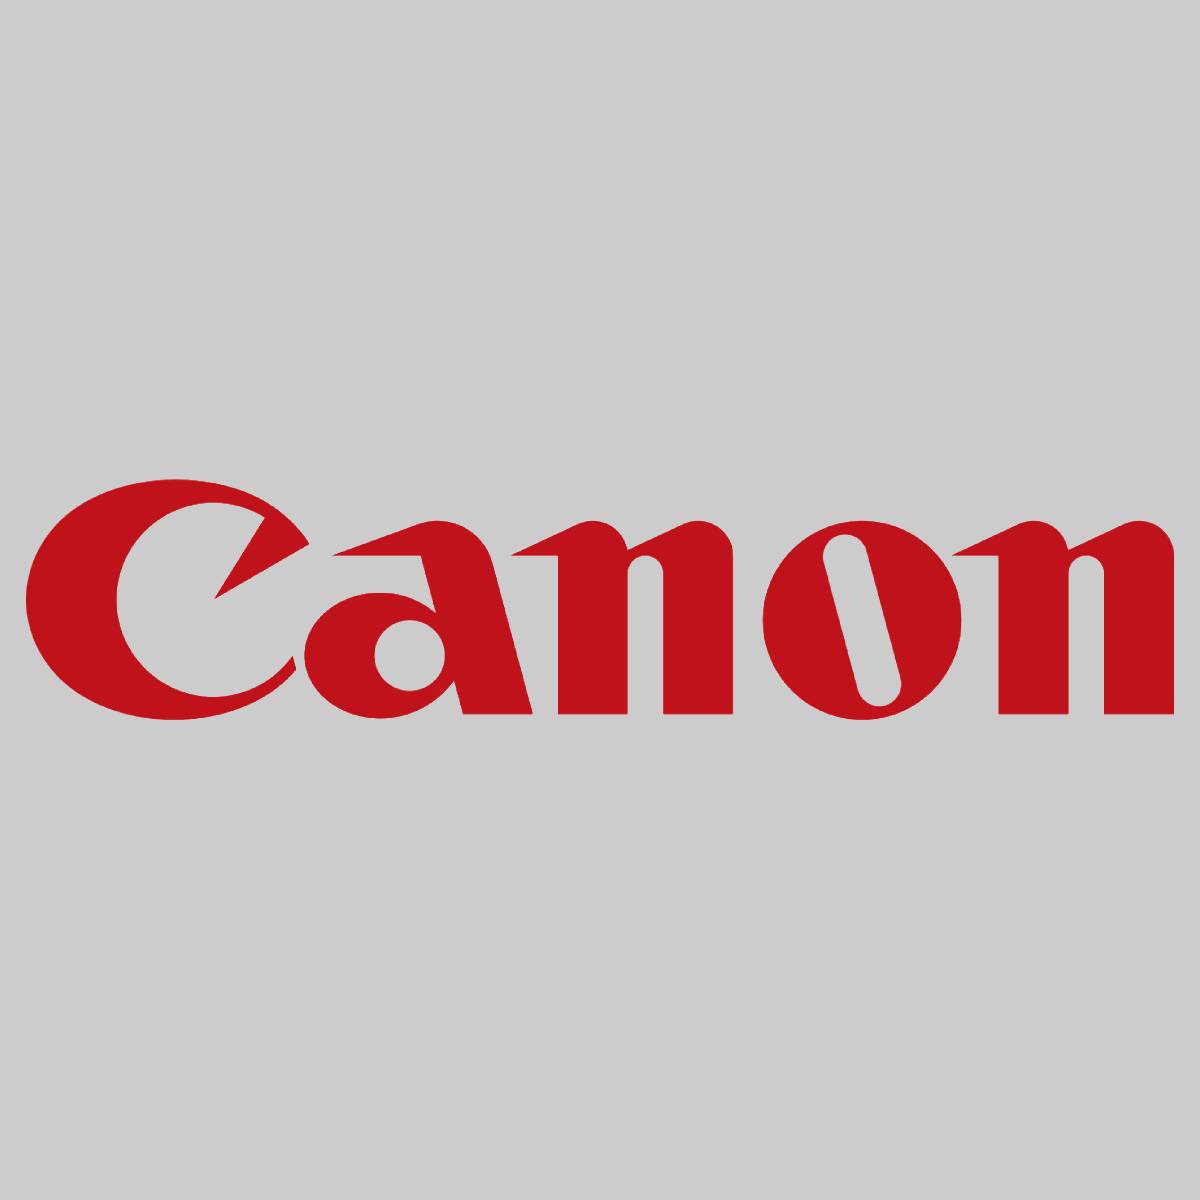 "Original Canon 0453B002 / C-EXV21 toner cartridge cyan for iR C2380i C3580 NEW^